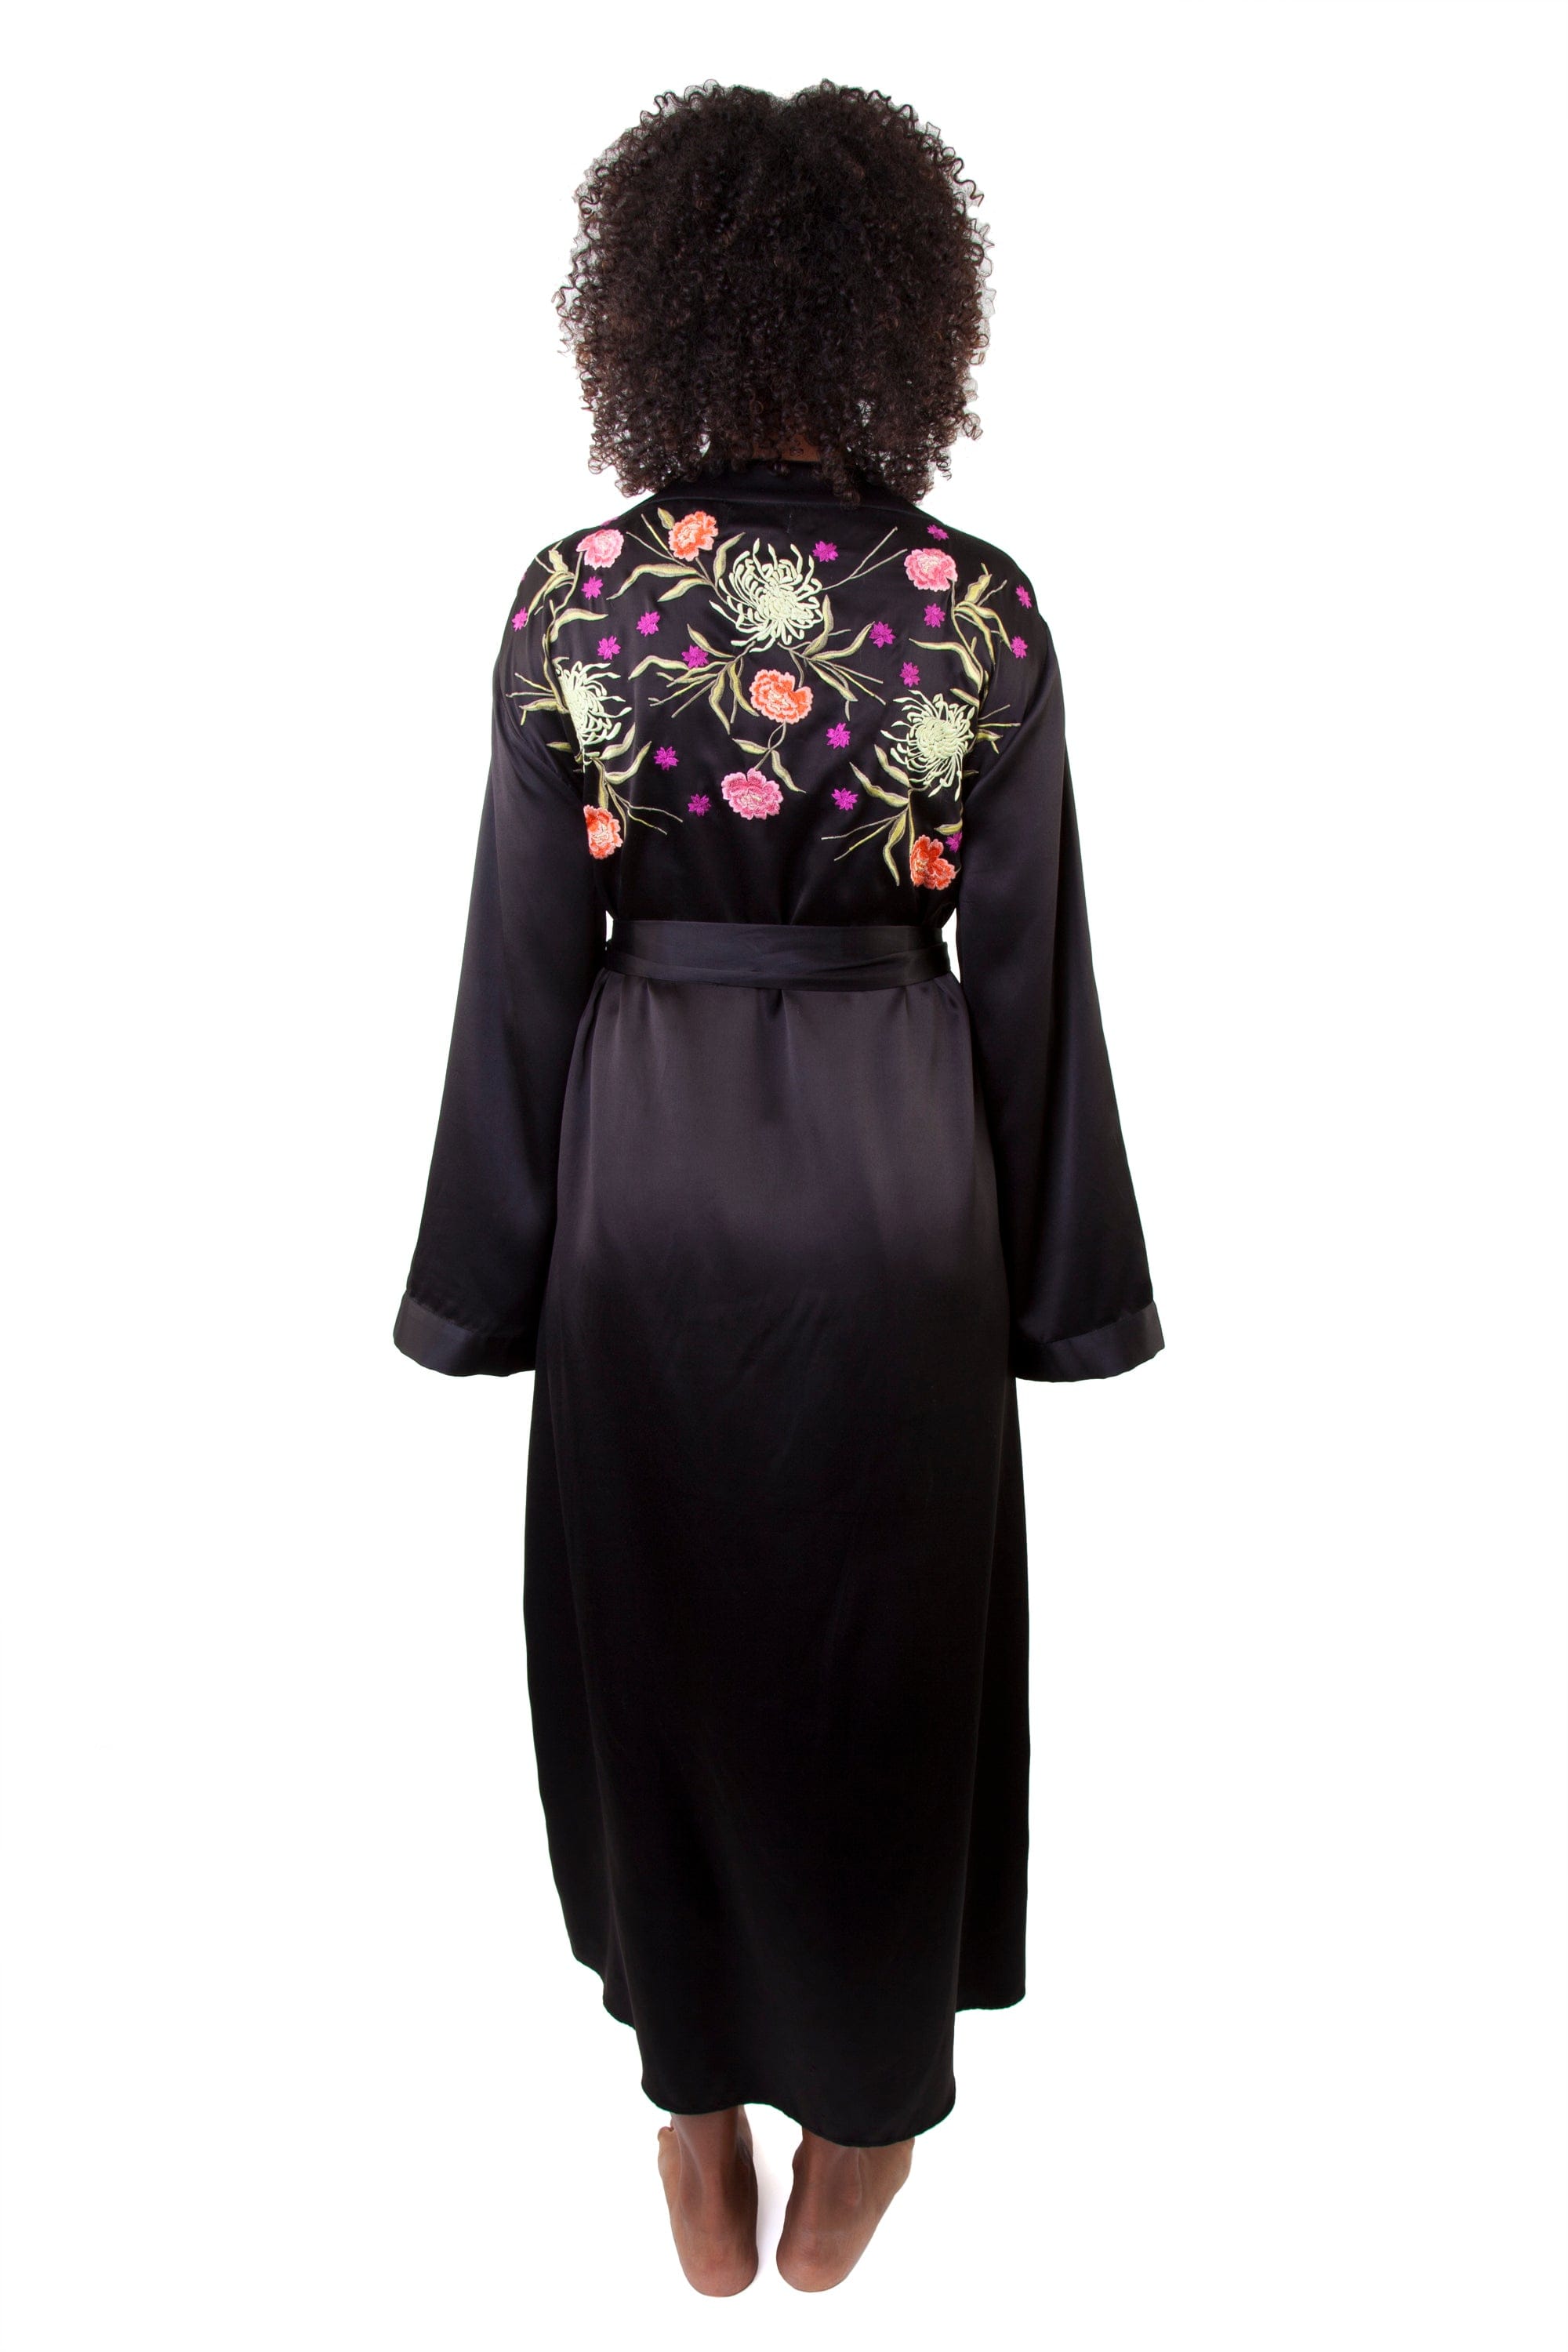 Jasmin Long Embroidered Kimono - Seconds